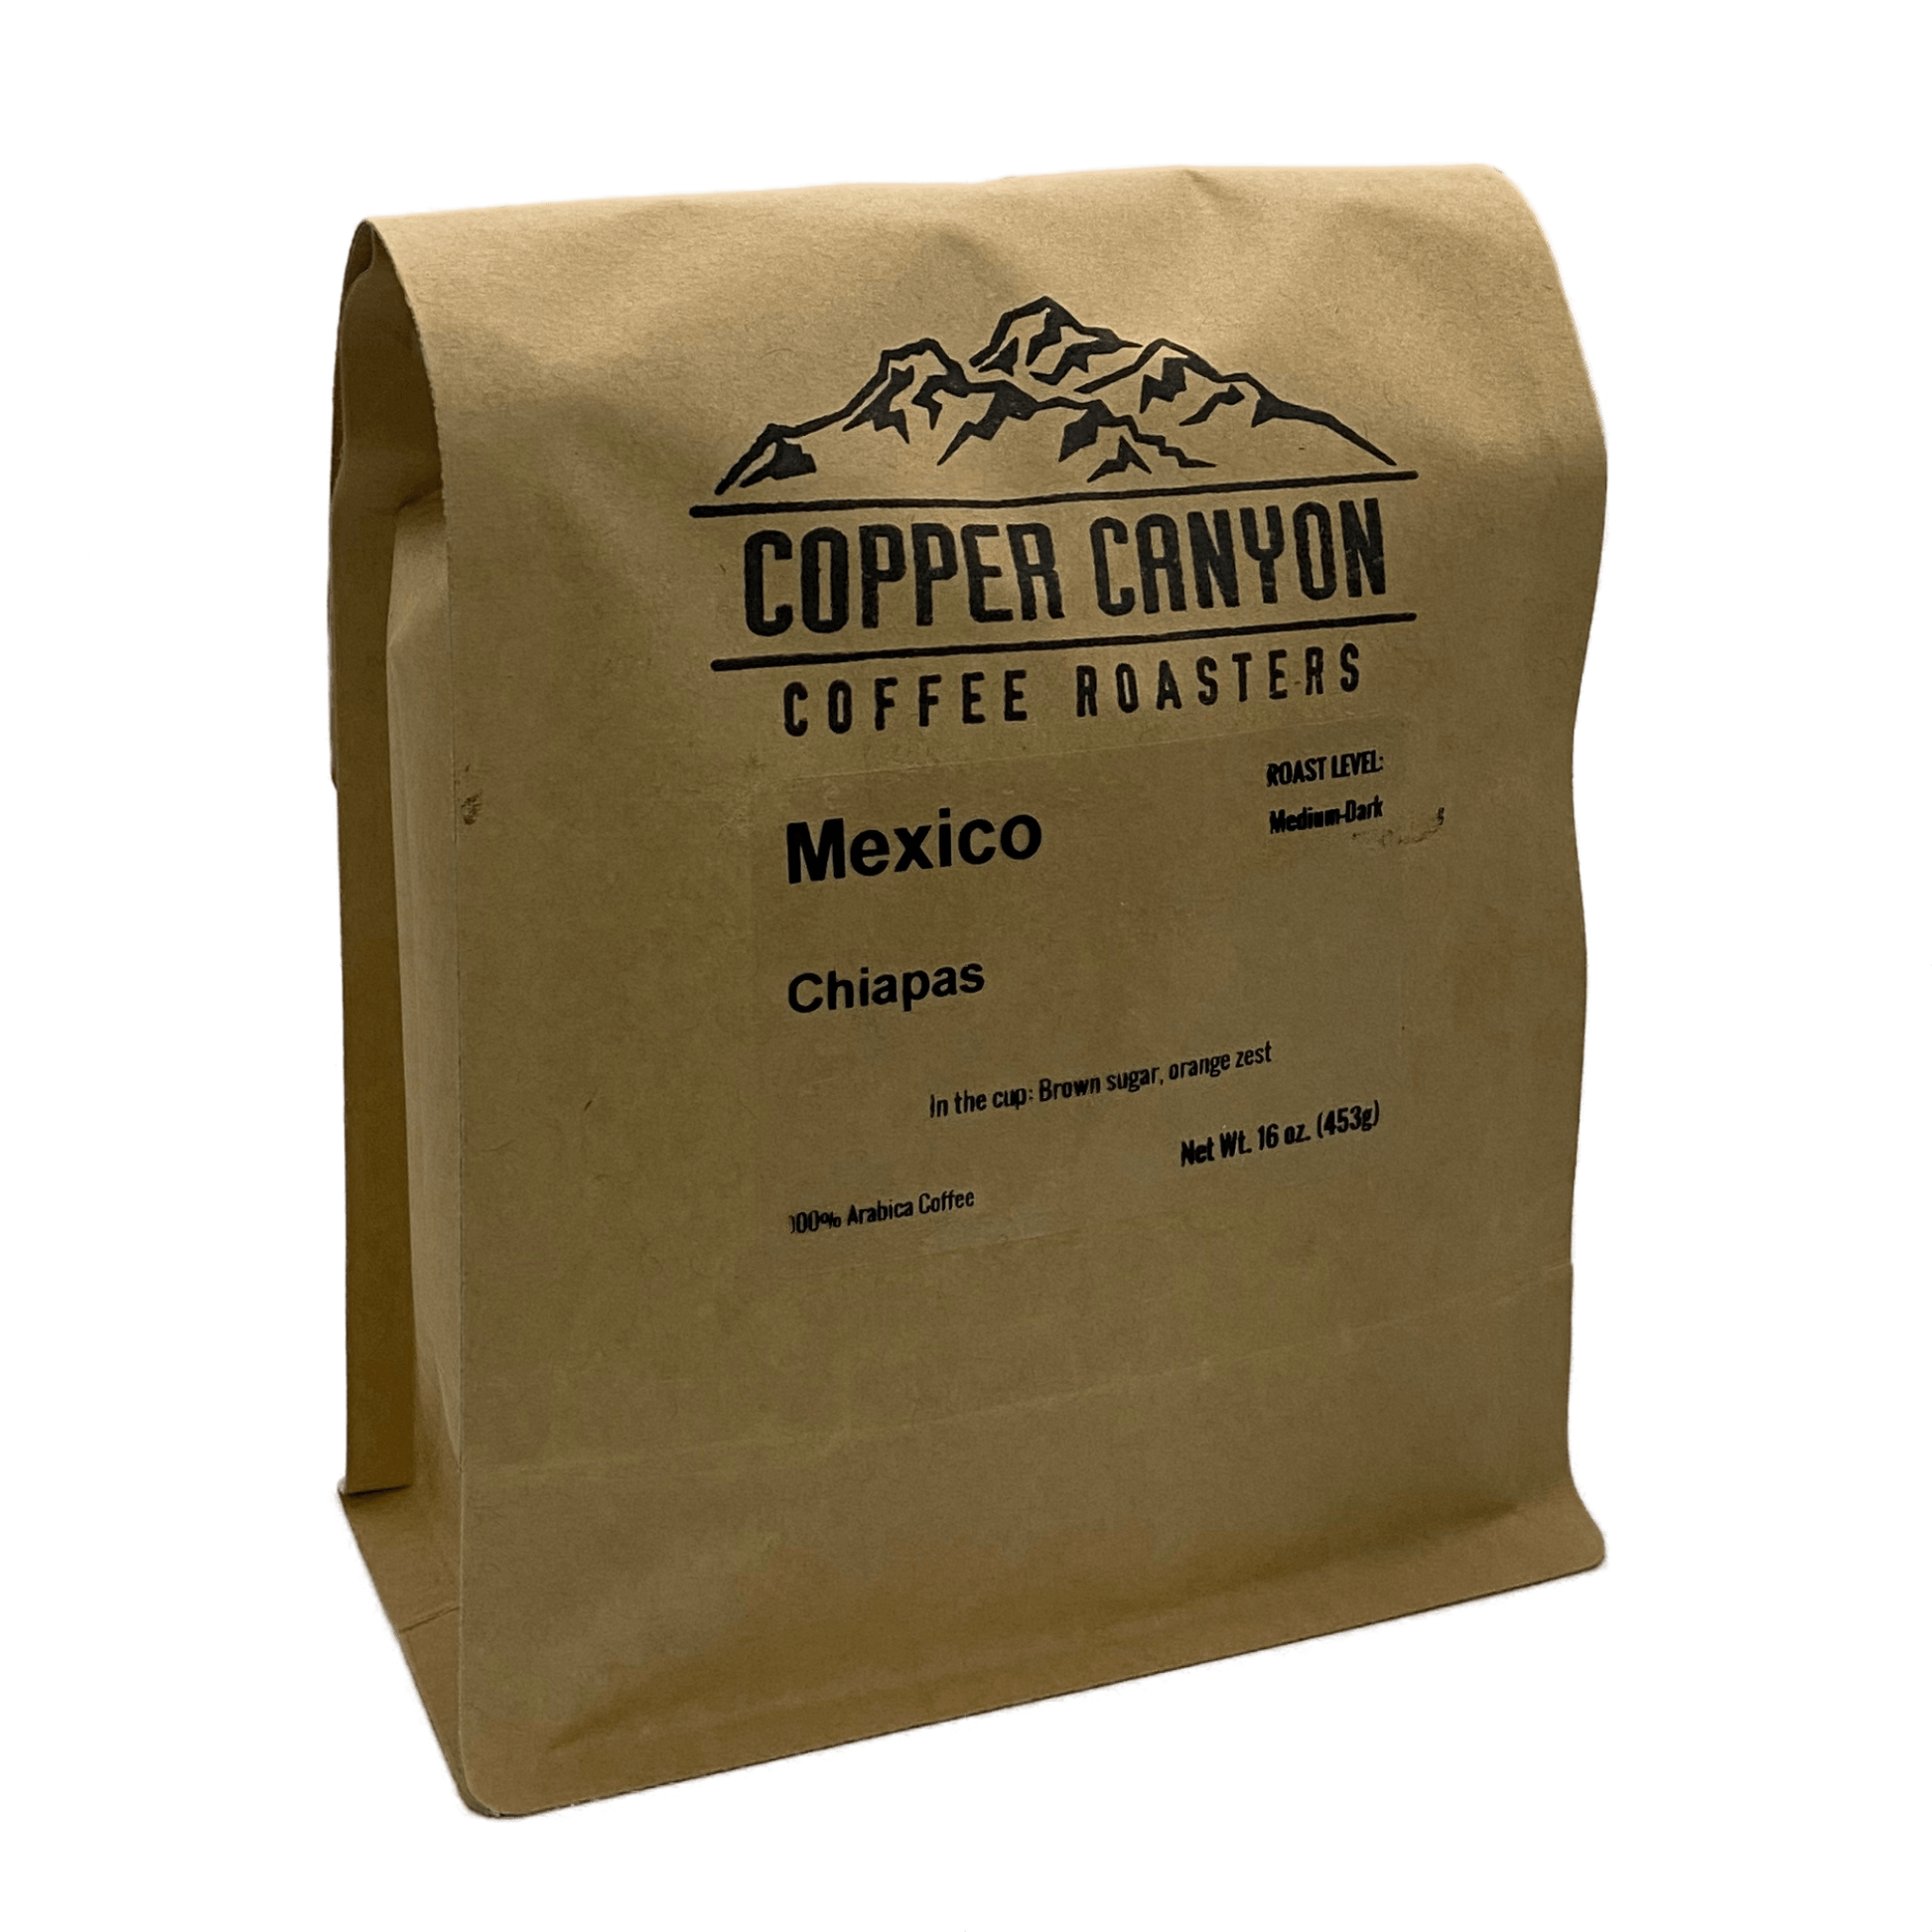 16 oz bag of Mexico, single origin, medium/dark roast coffee